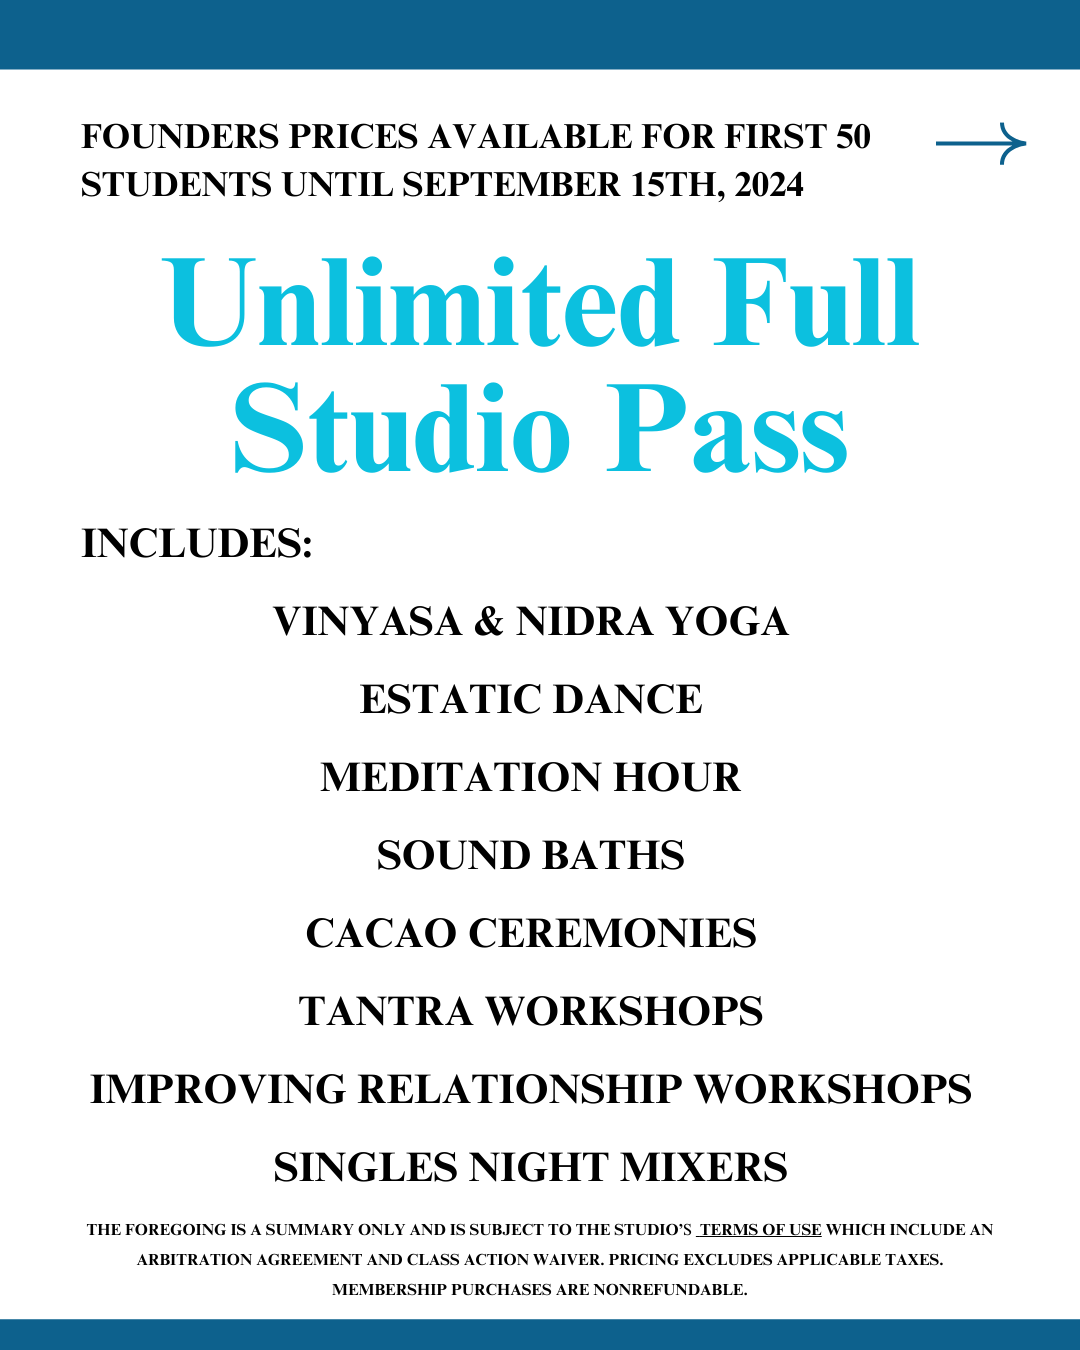 Unlimited Full Studio Access